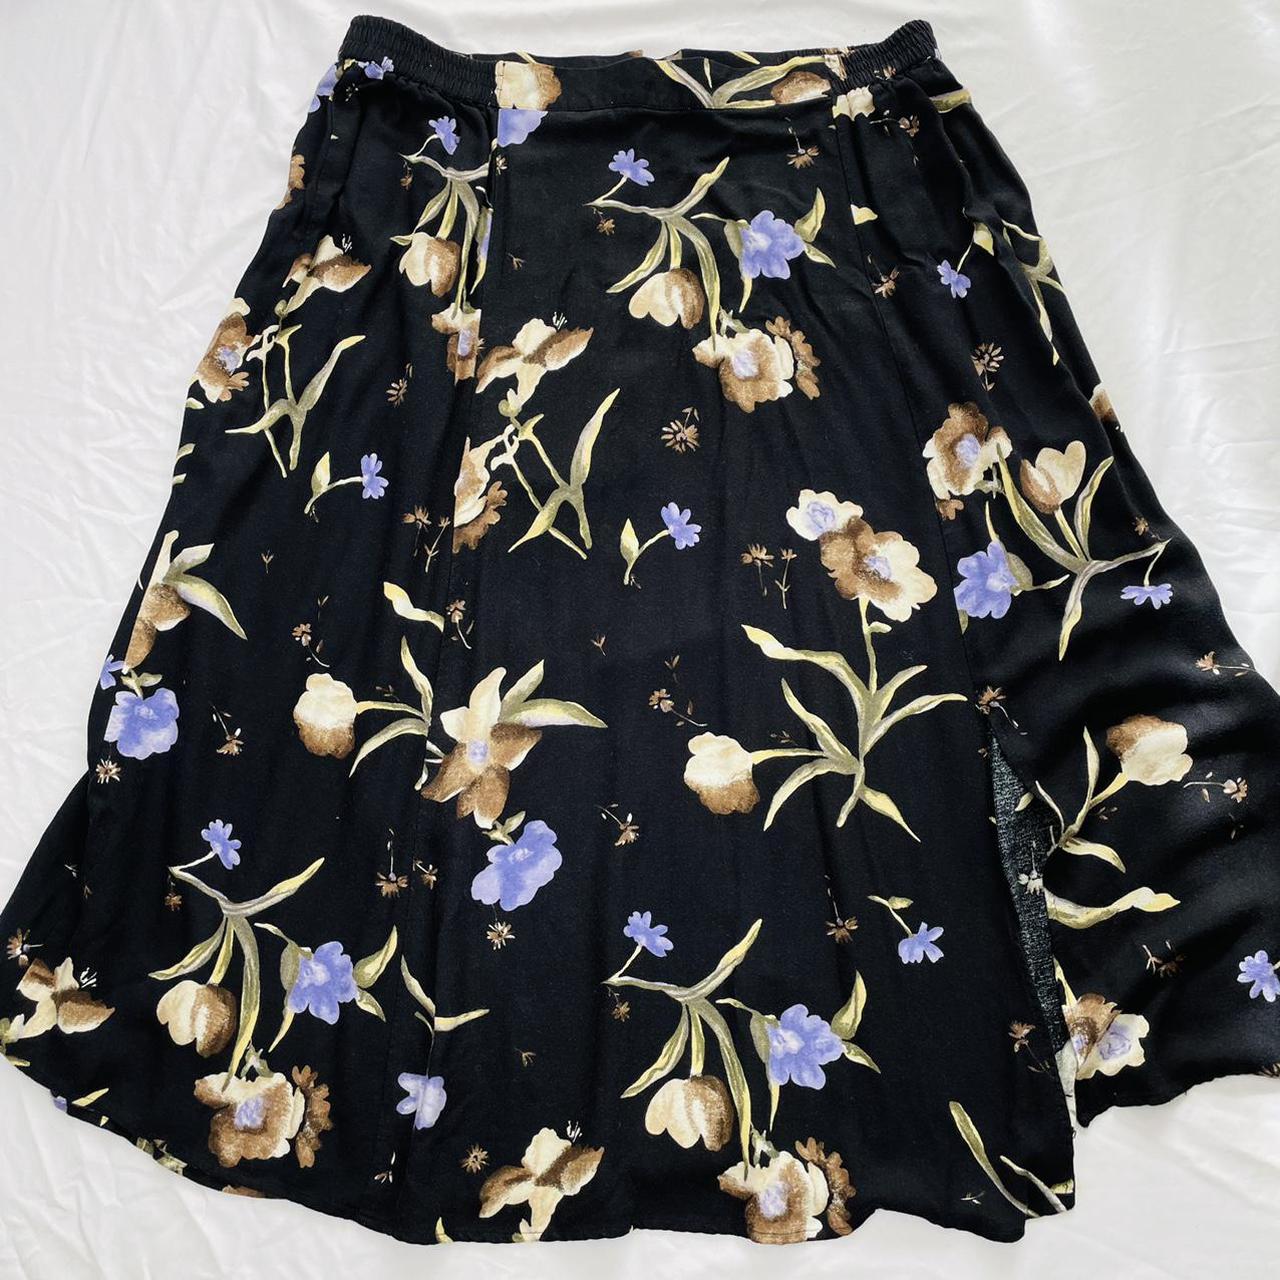 Product Image 2 - black floral skirt 

measurements laid